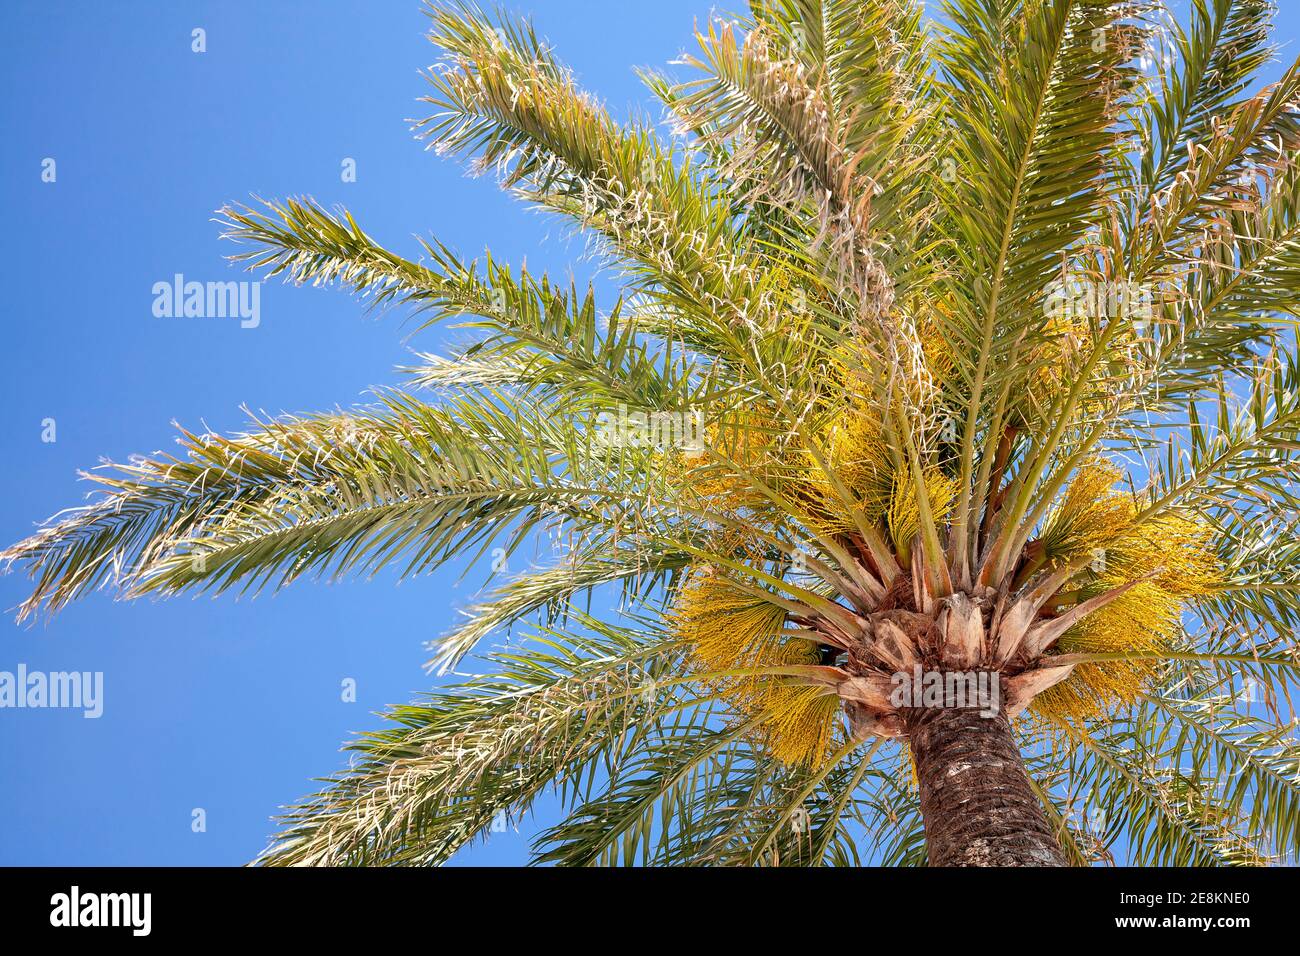 Palm tree and fronds, Cadiz, Spain Stock Photo